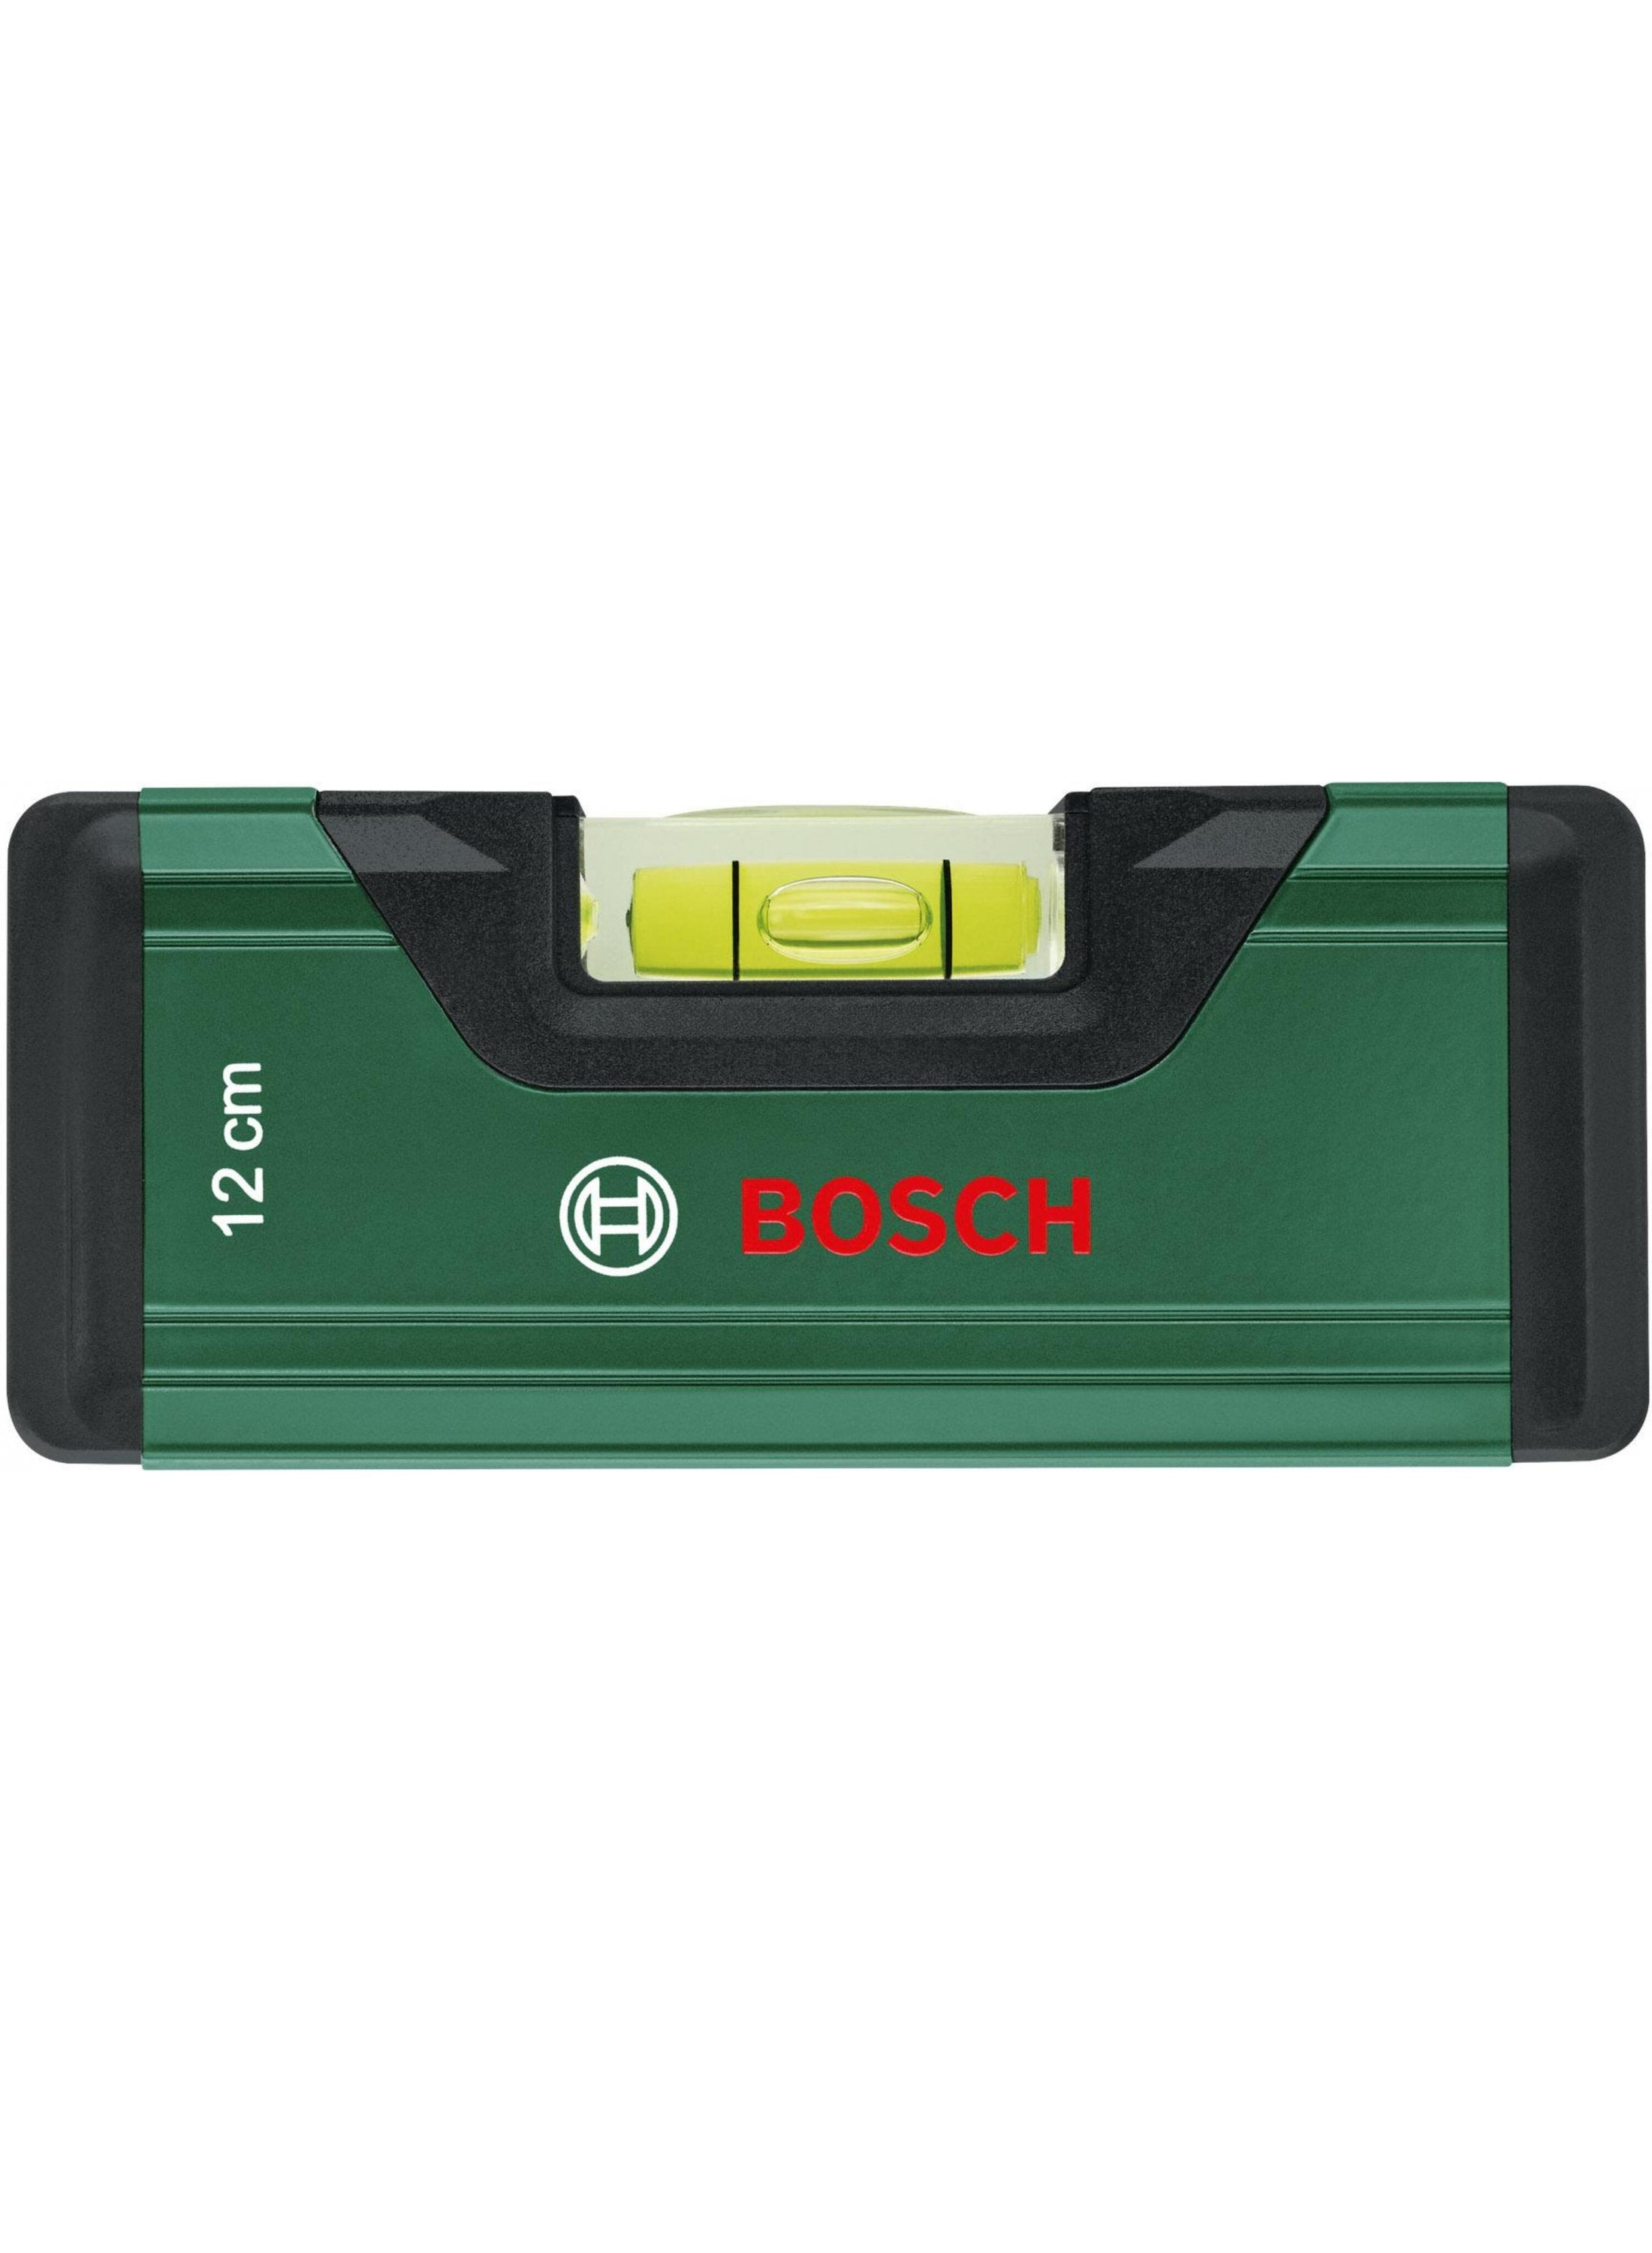 Bosch DIY Spirit Level 12cm 1600A02H3H